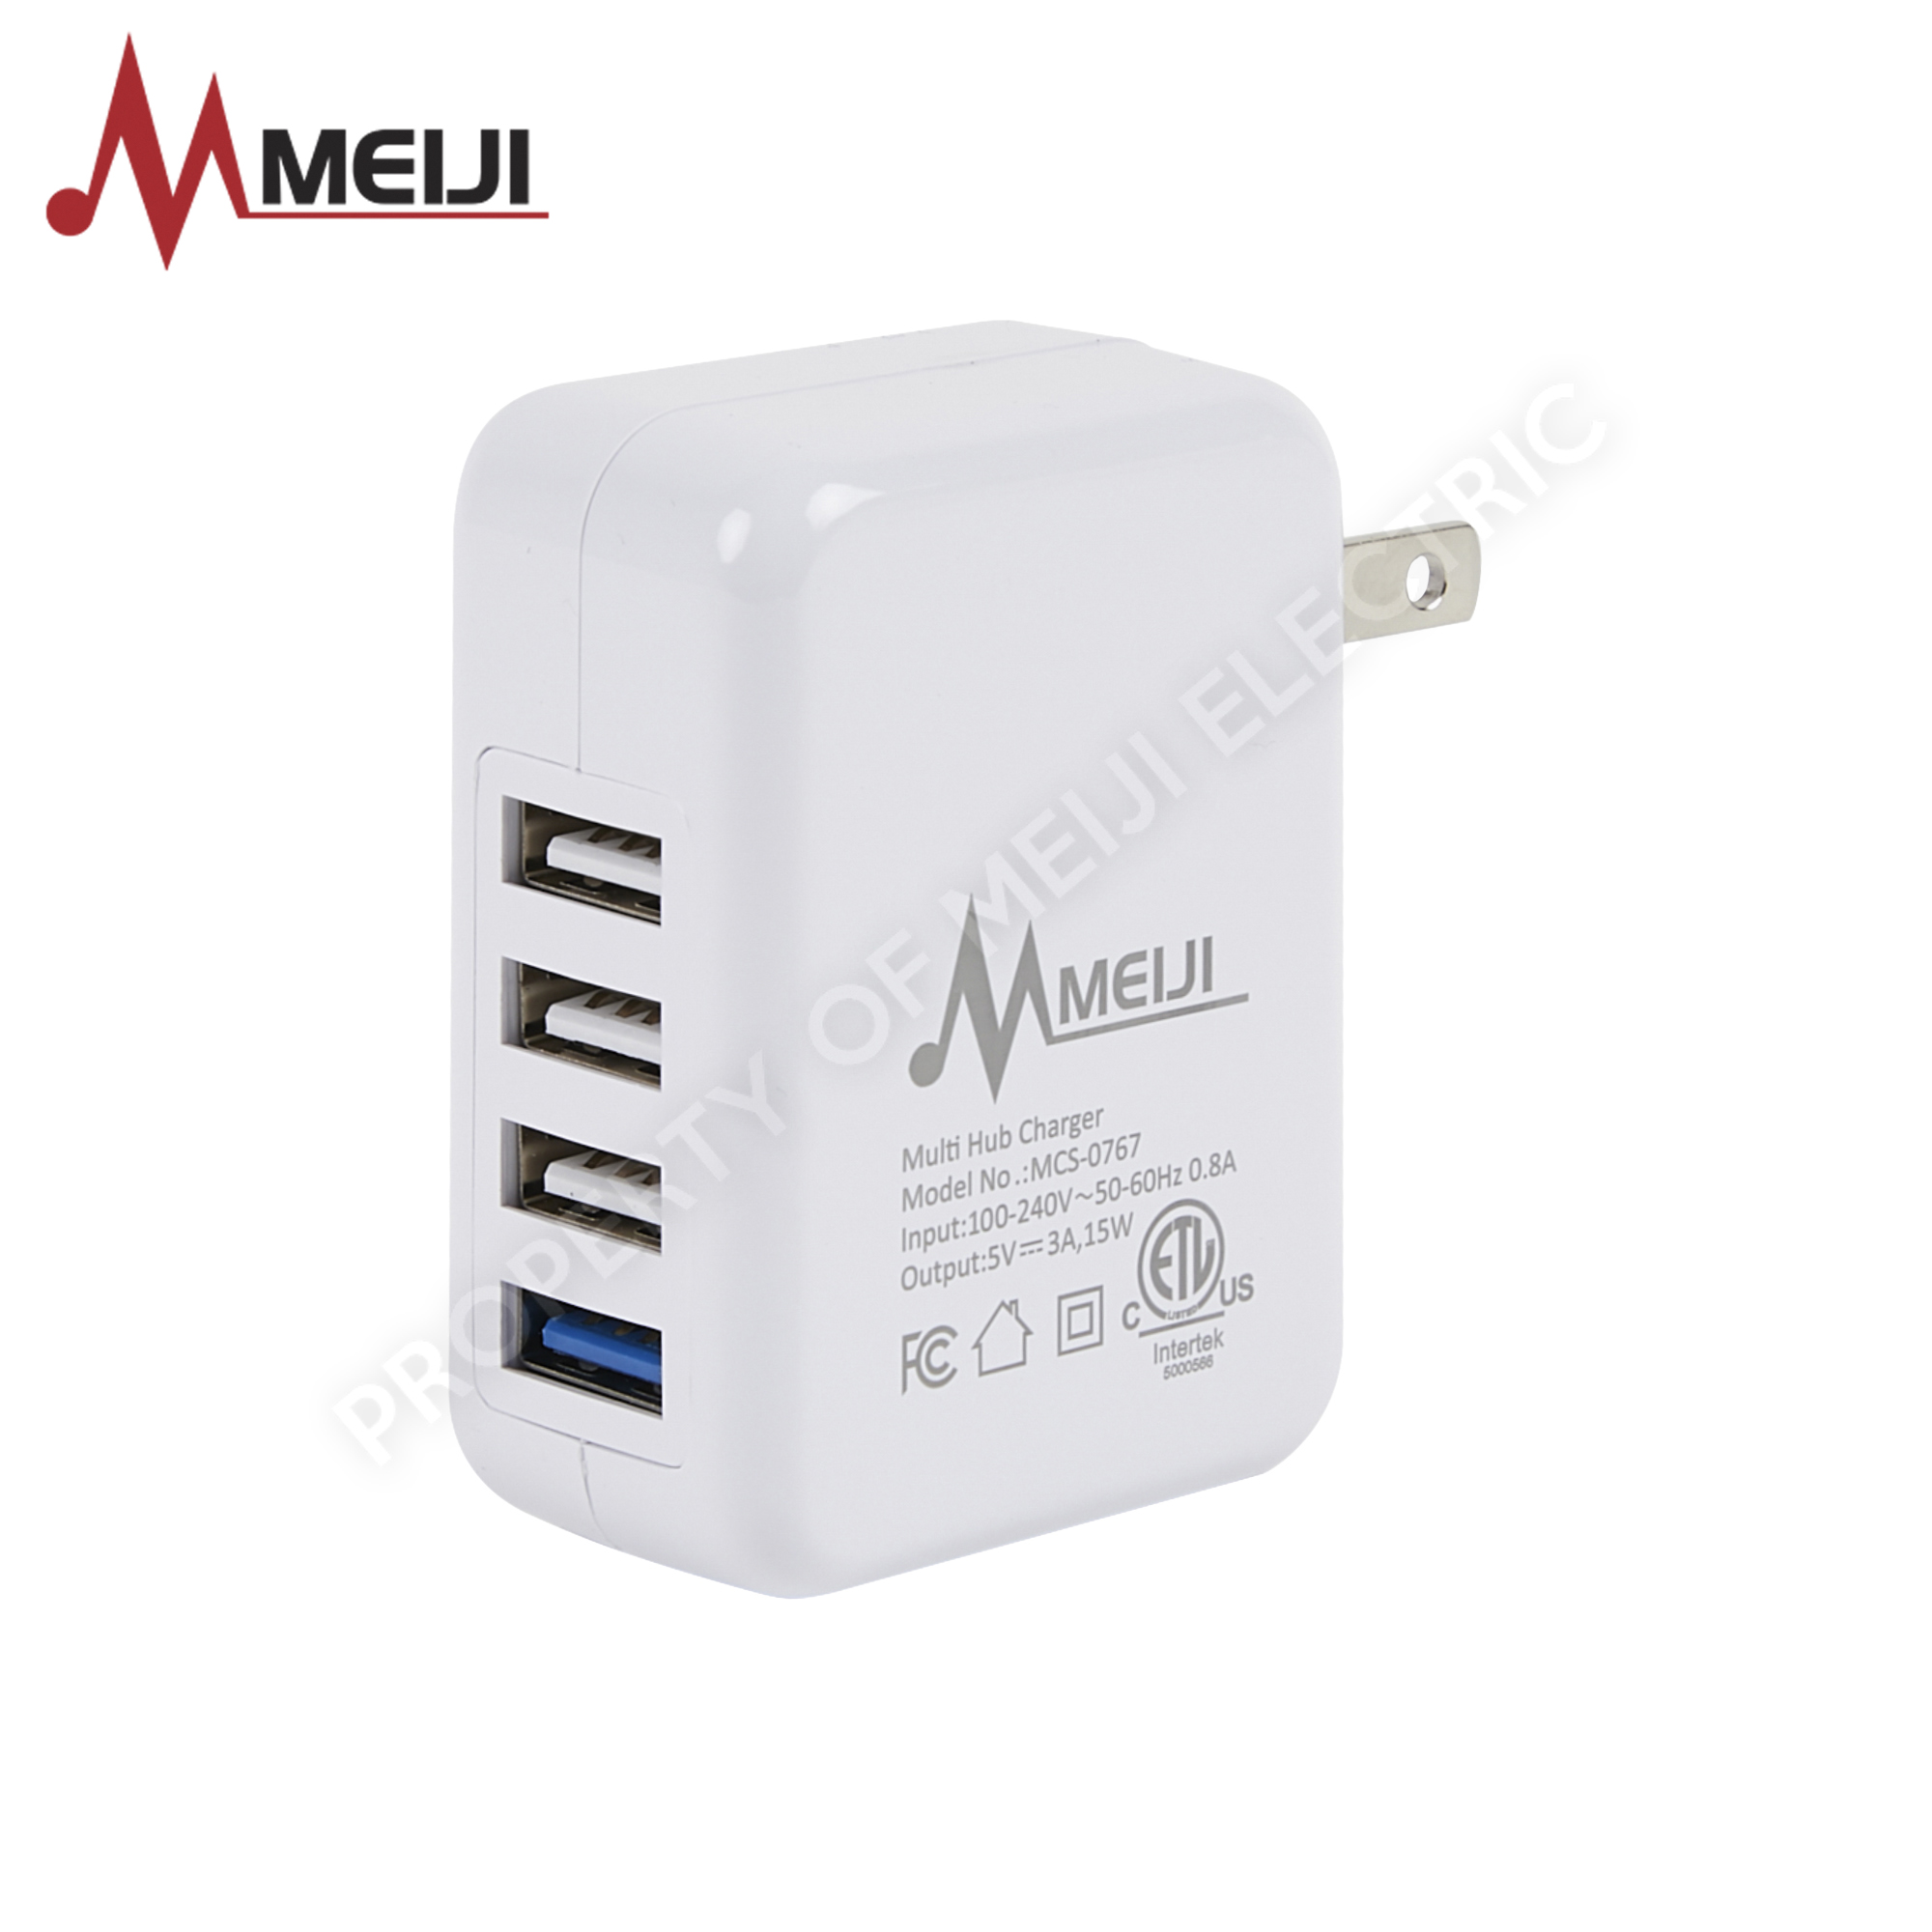 Stejl krone største Meiji Electric 4-Port Multi-Port USB Hub Charger 3A – MCS-0767 - Meiji  Electric PH